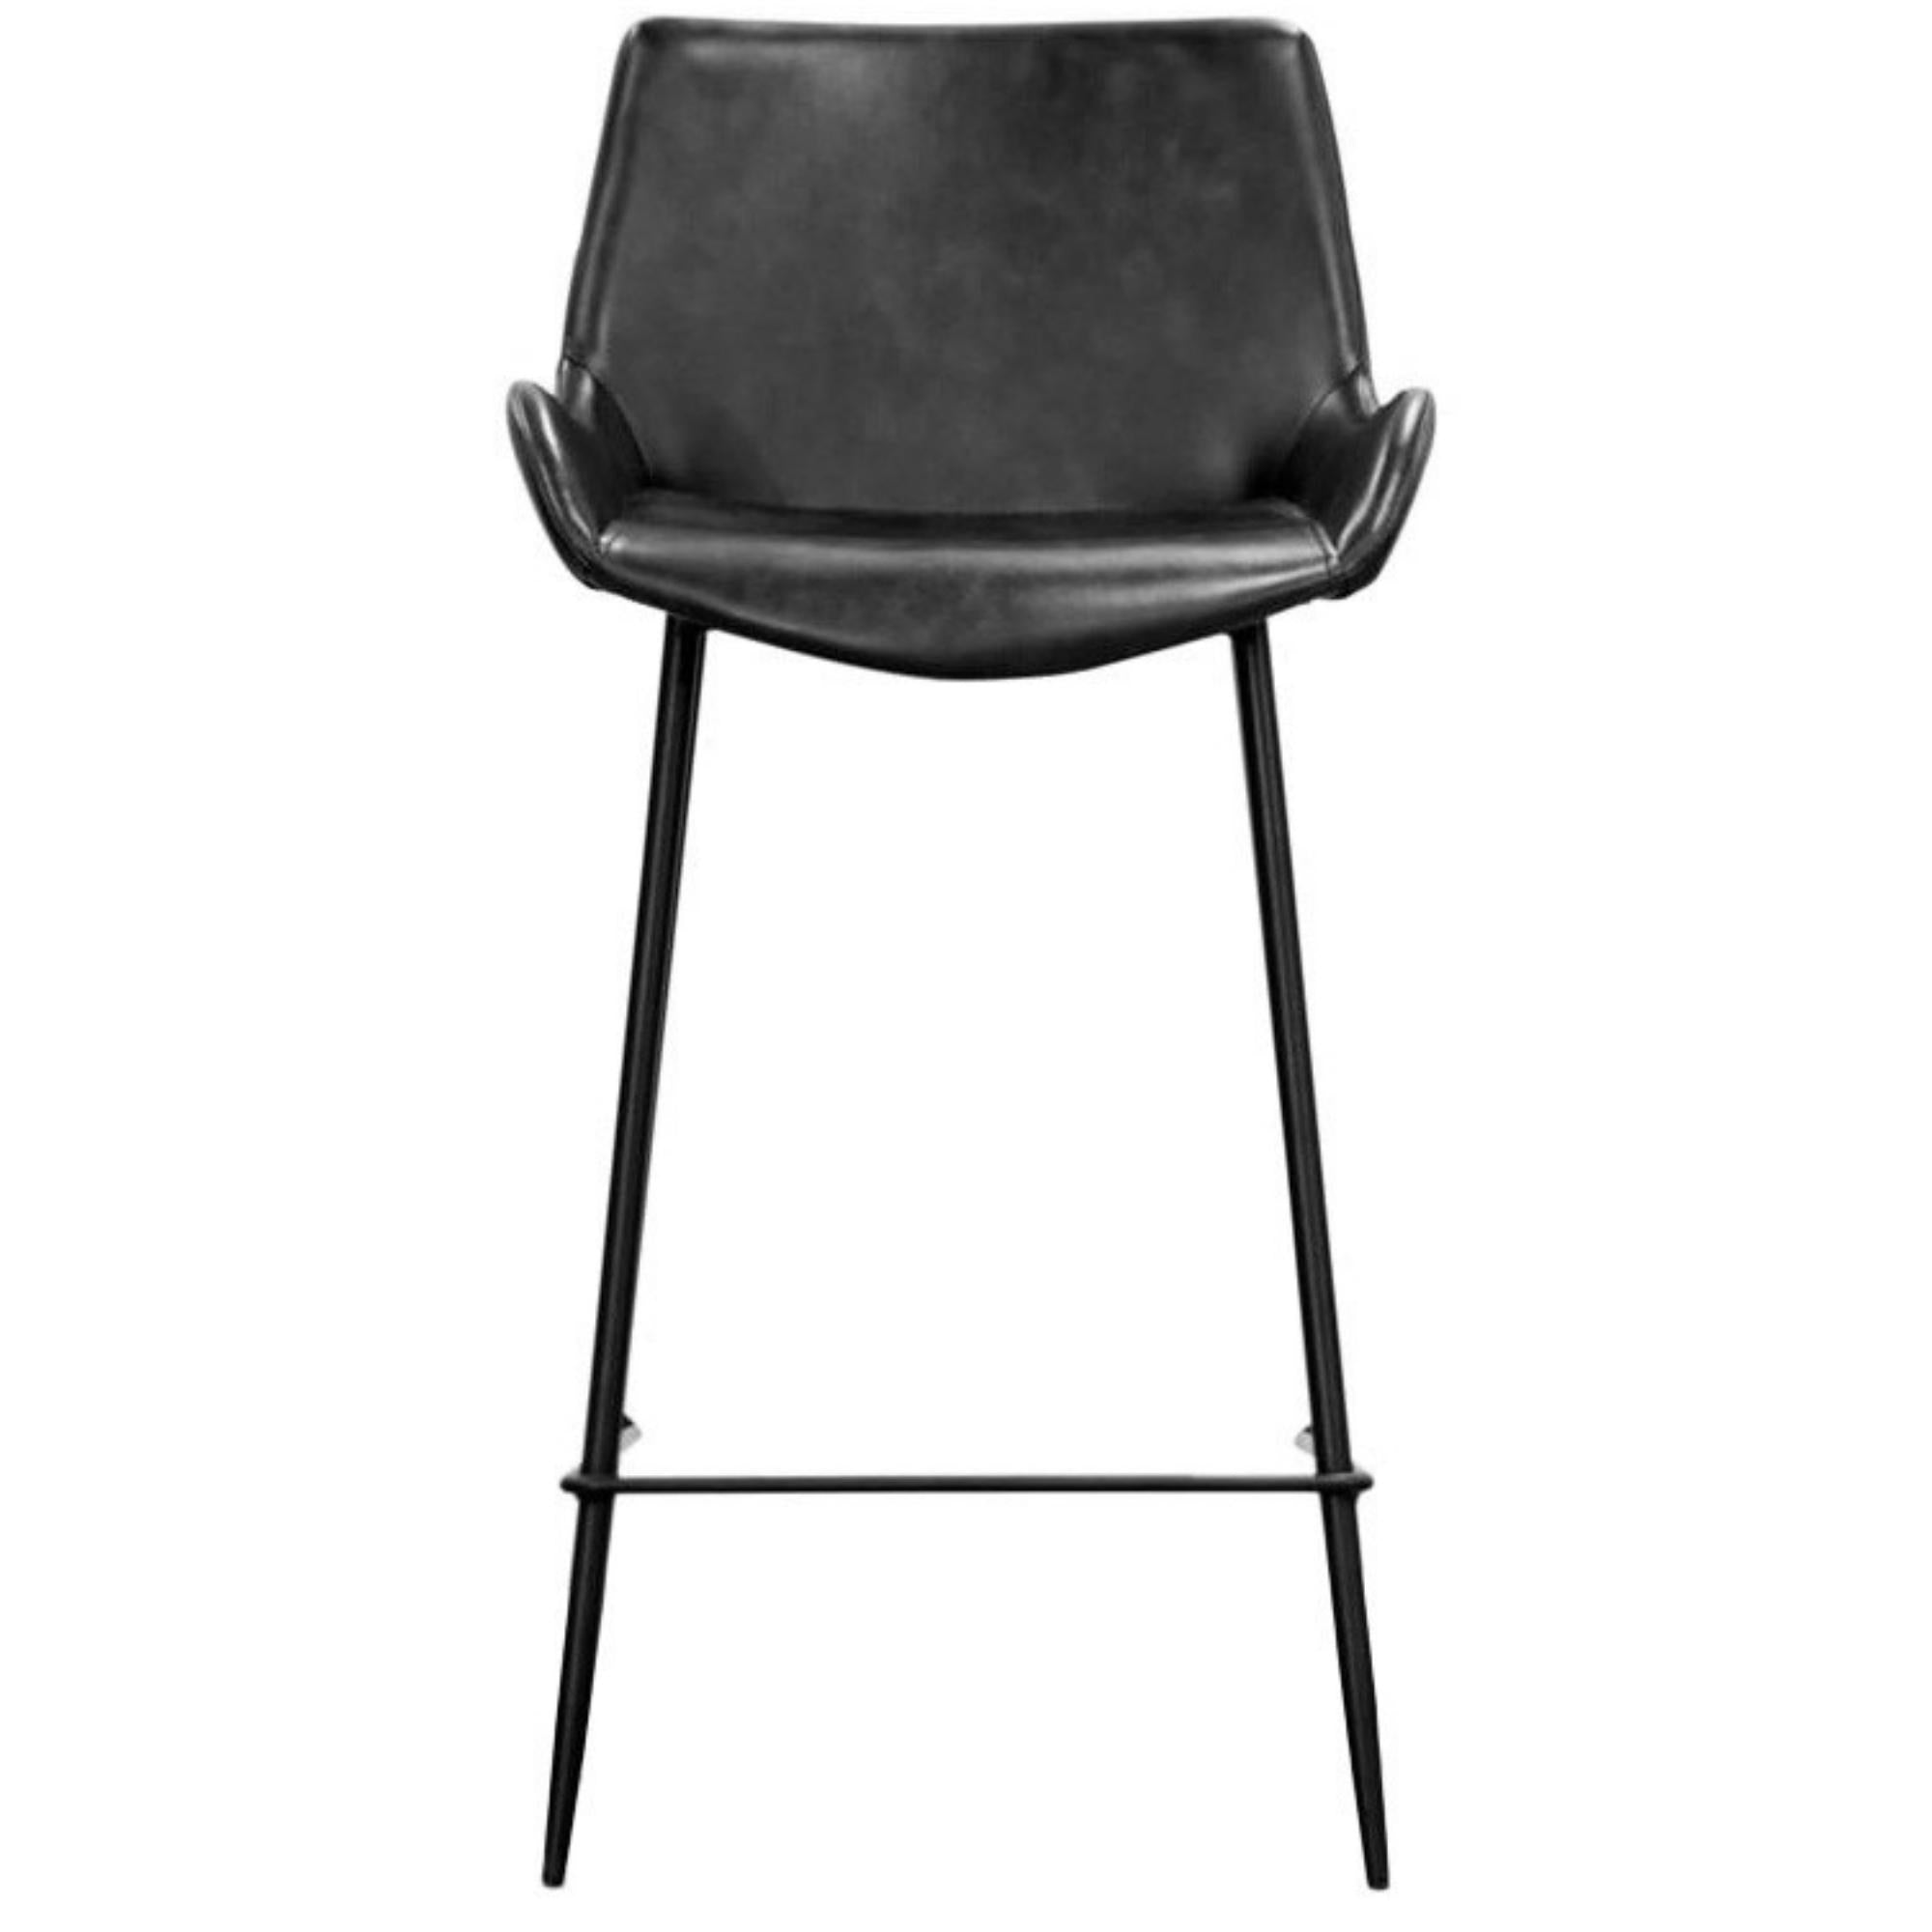 Set of 2 PU Leather Upholstered Bar Chair Metal Leg Stool Vintage Grey